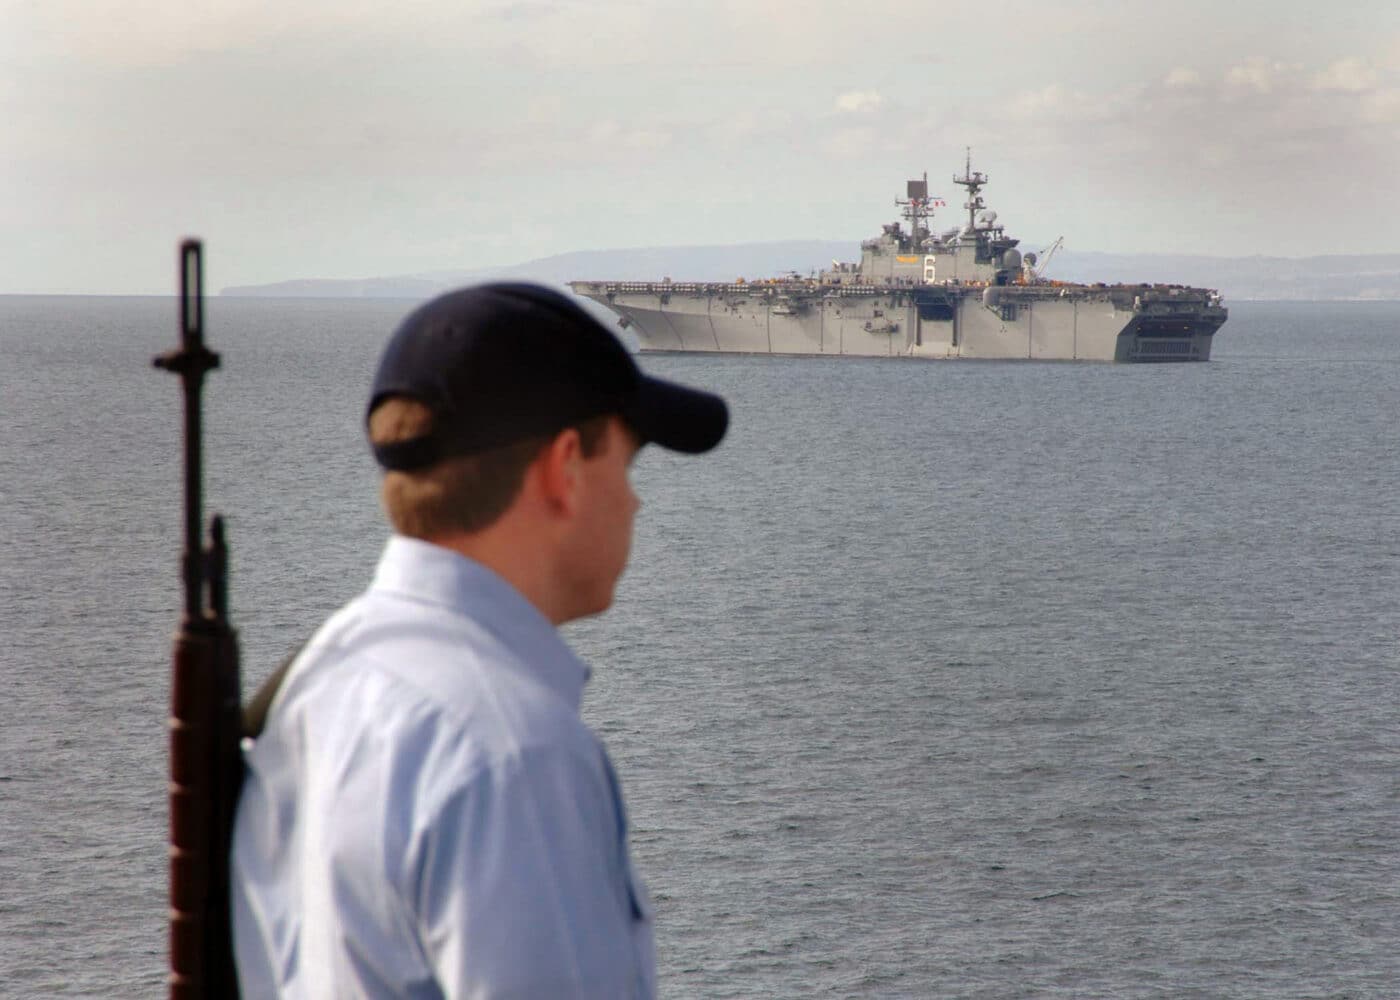 Sailor on watch aboard the USS Tarawa